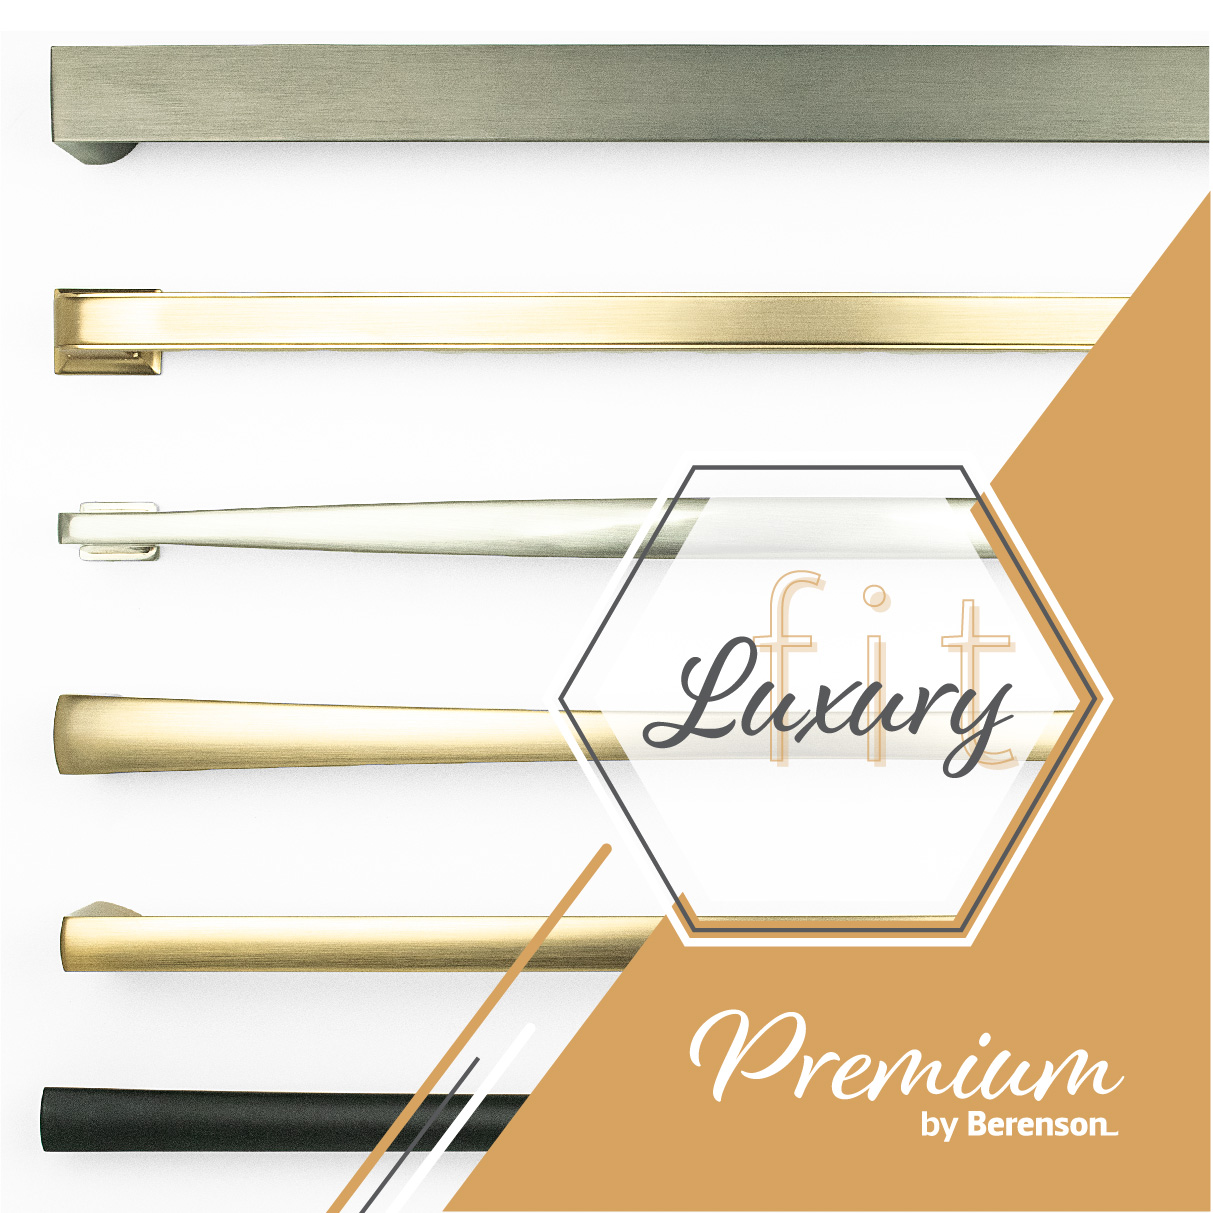 Premium by Berenson Luxury Fit Hardware